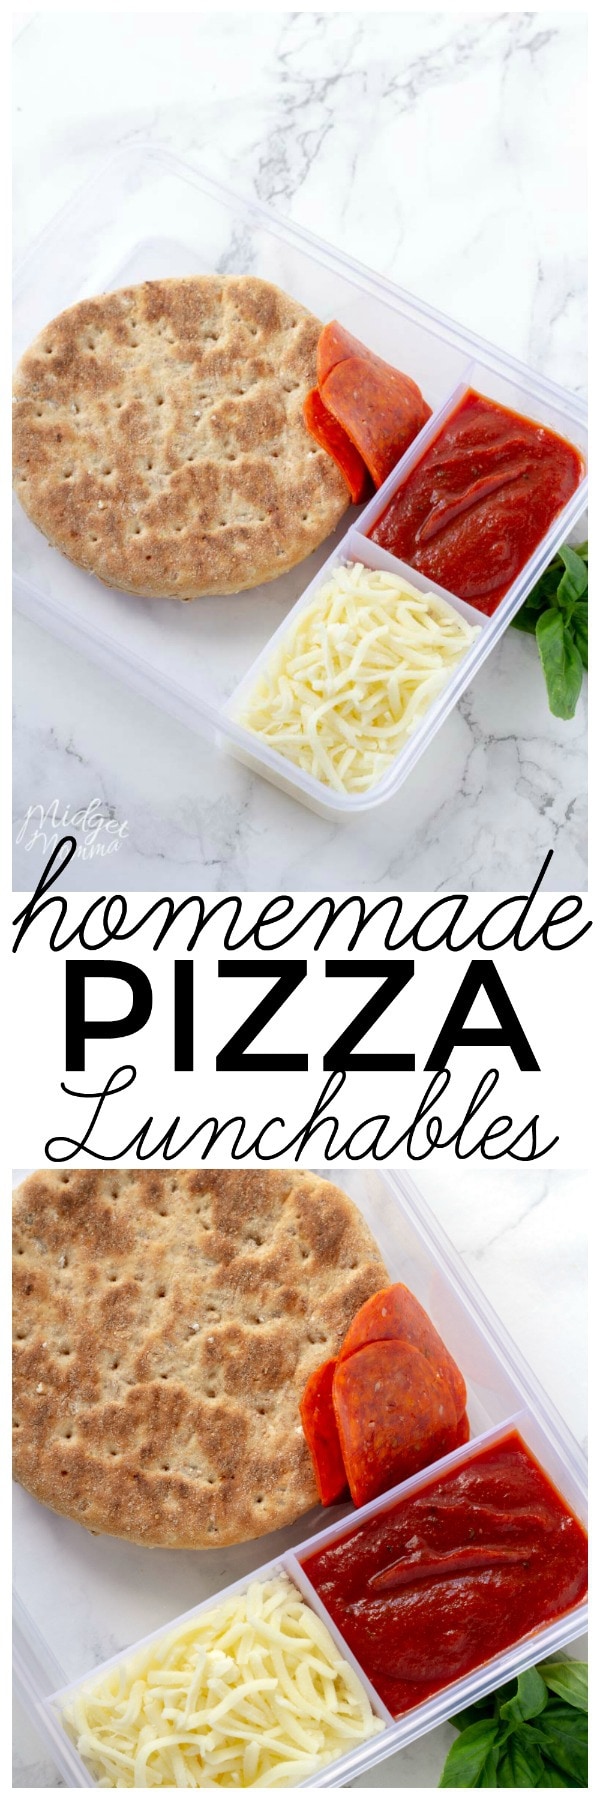 https://www.midgetmomma.com/wp-content/uploads/2018/07/easy-pizza-lunchables.jpg